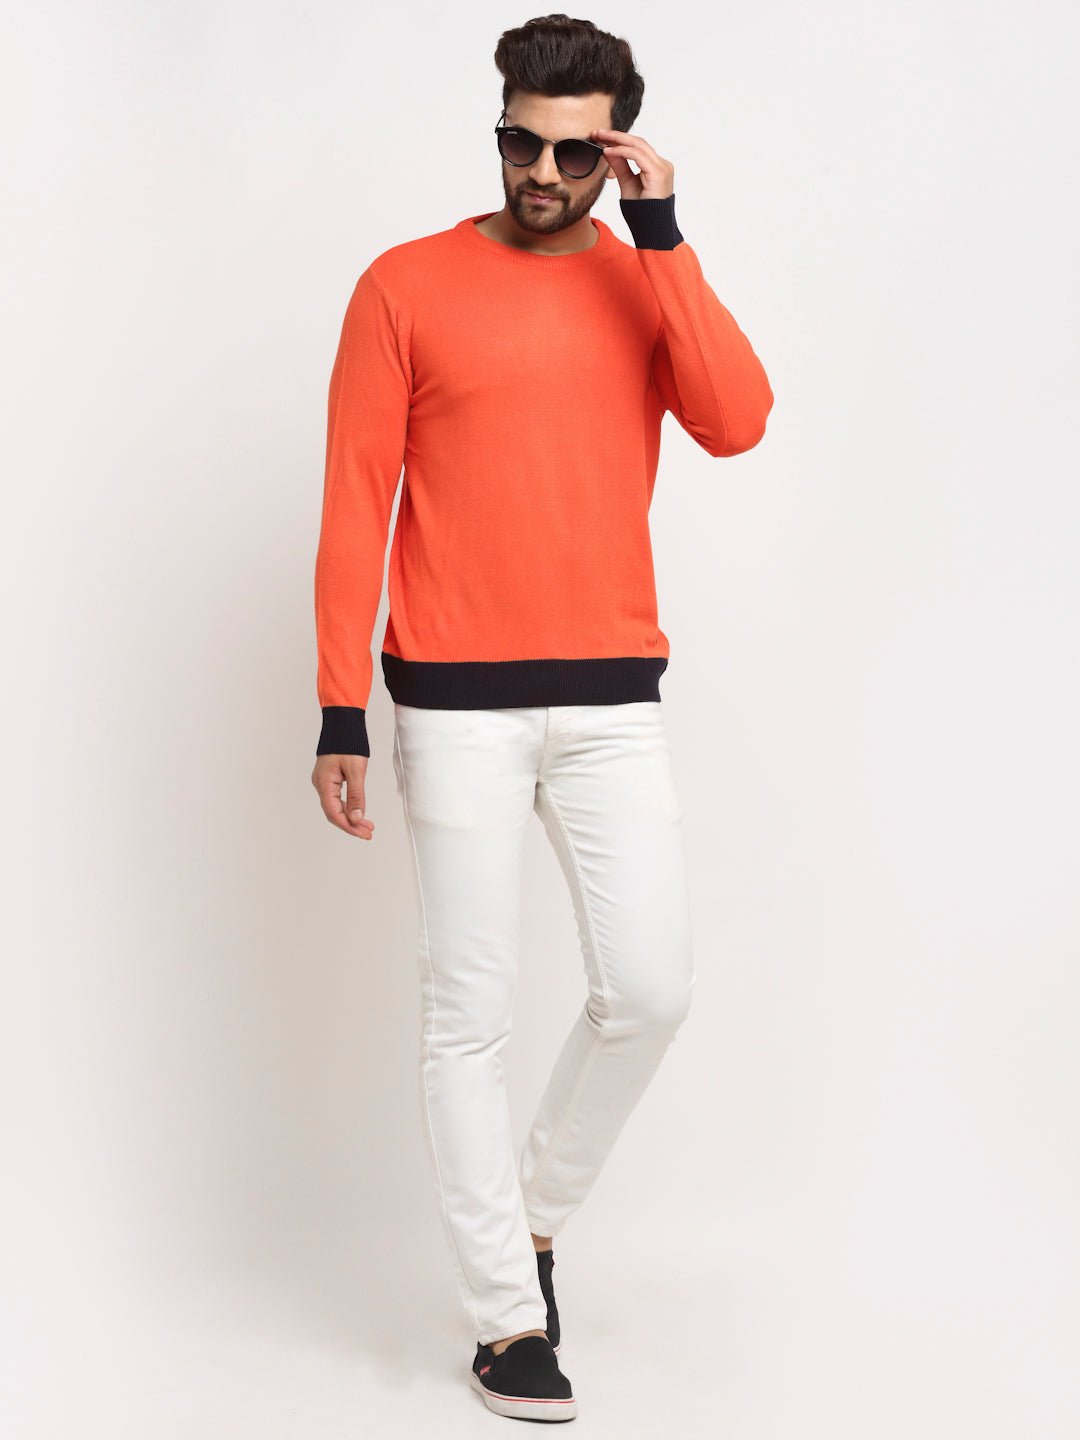 Orange Colourblocked Round Neck Sweater - clubyork